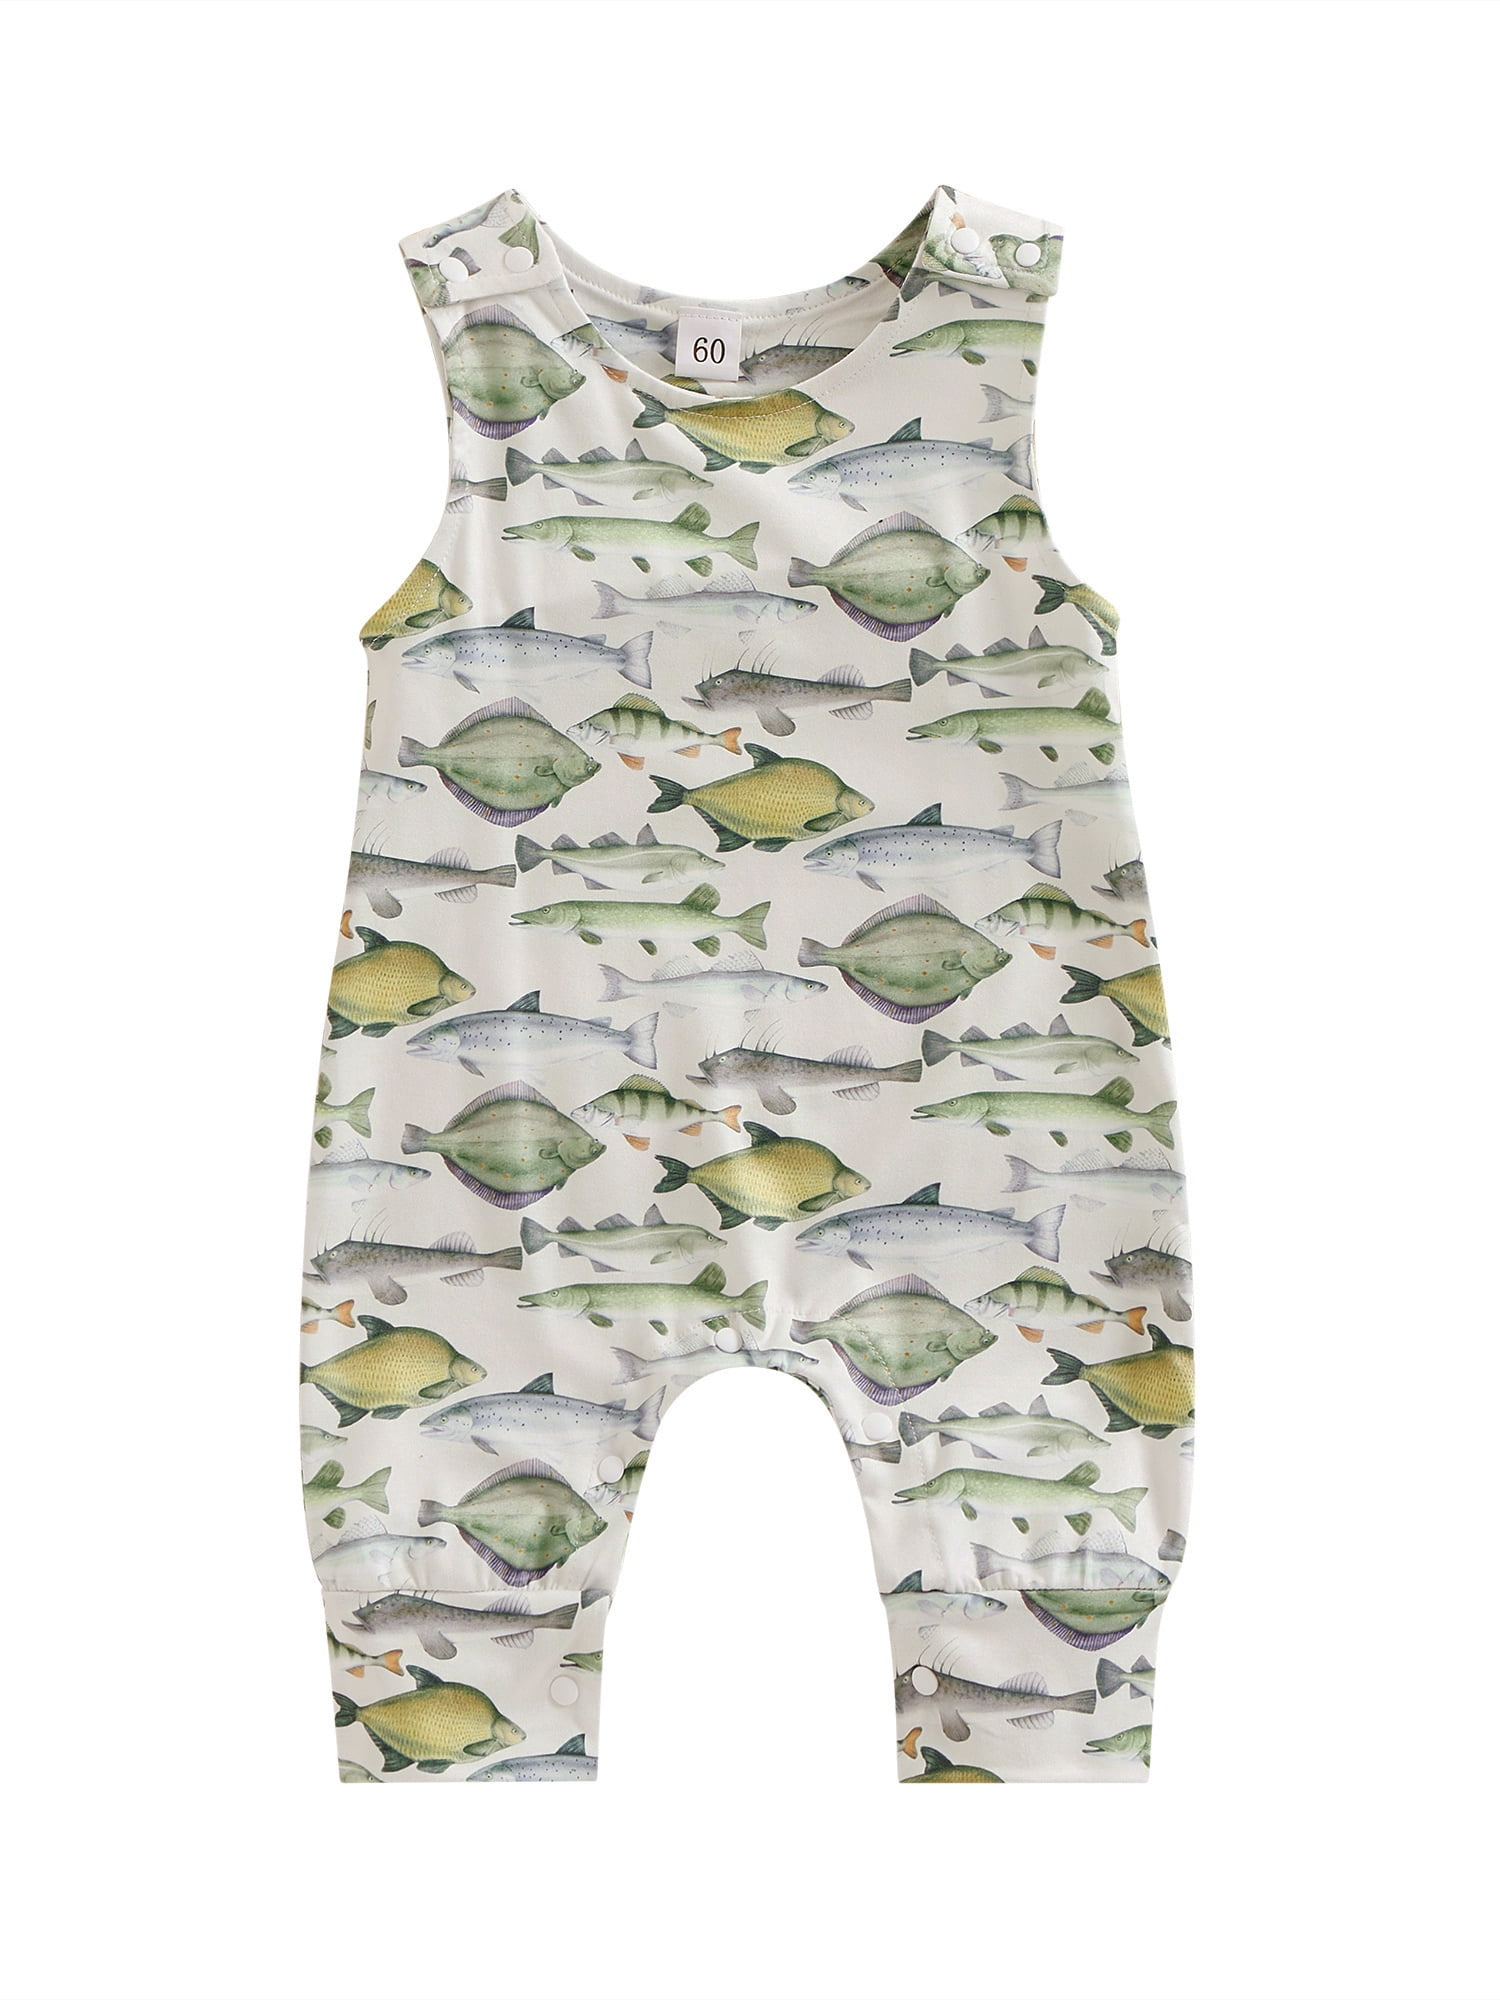 Gwiyeopda Infant Baby Girls Boys Summer Jumpsuit Sleeveless Dinosaur/Fish  Print Romper Cute Animals Outfits 